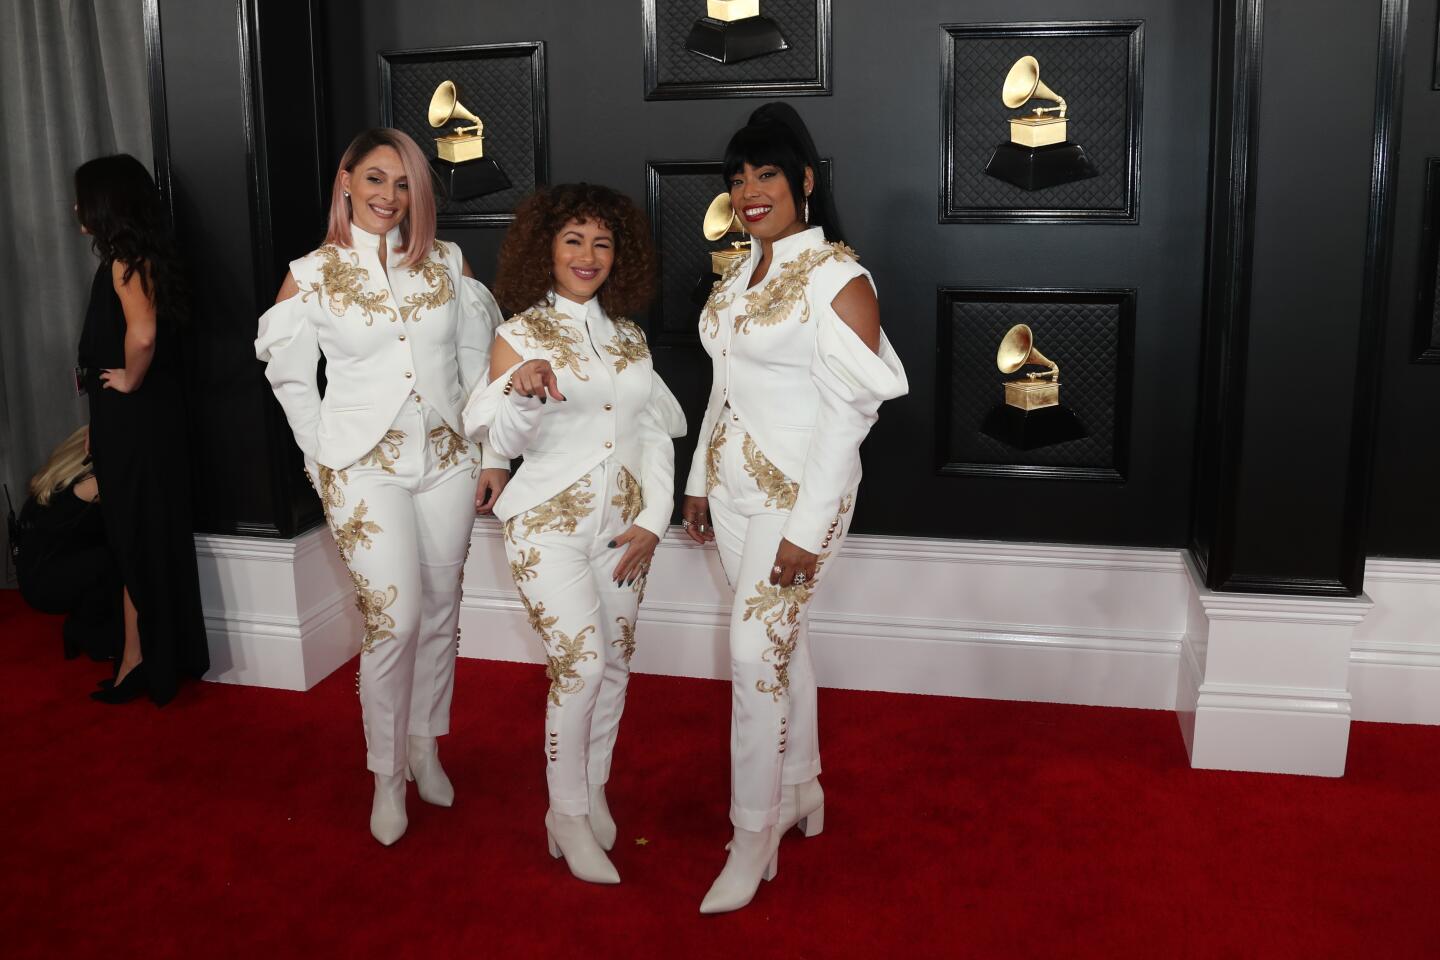 Grammy Awards 2020 arrivals